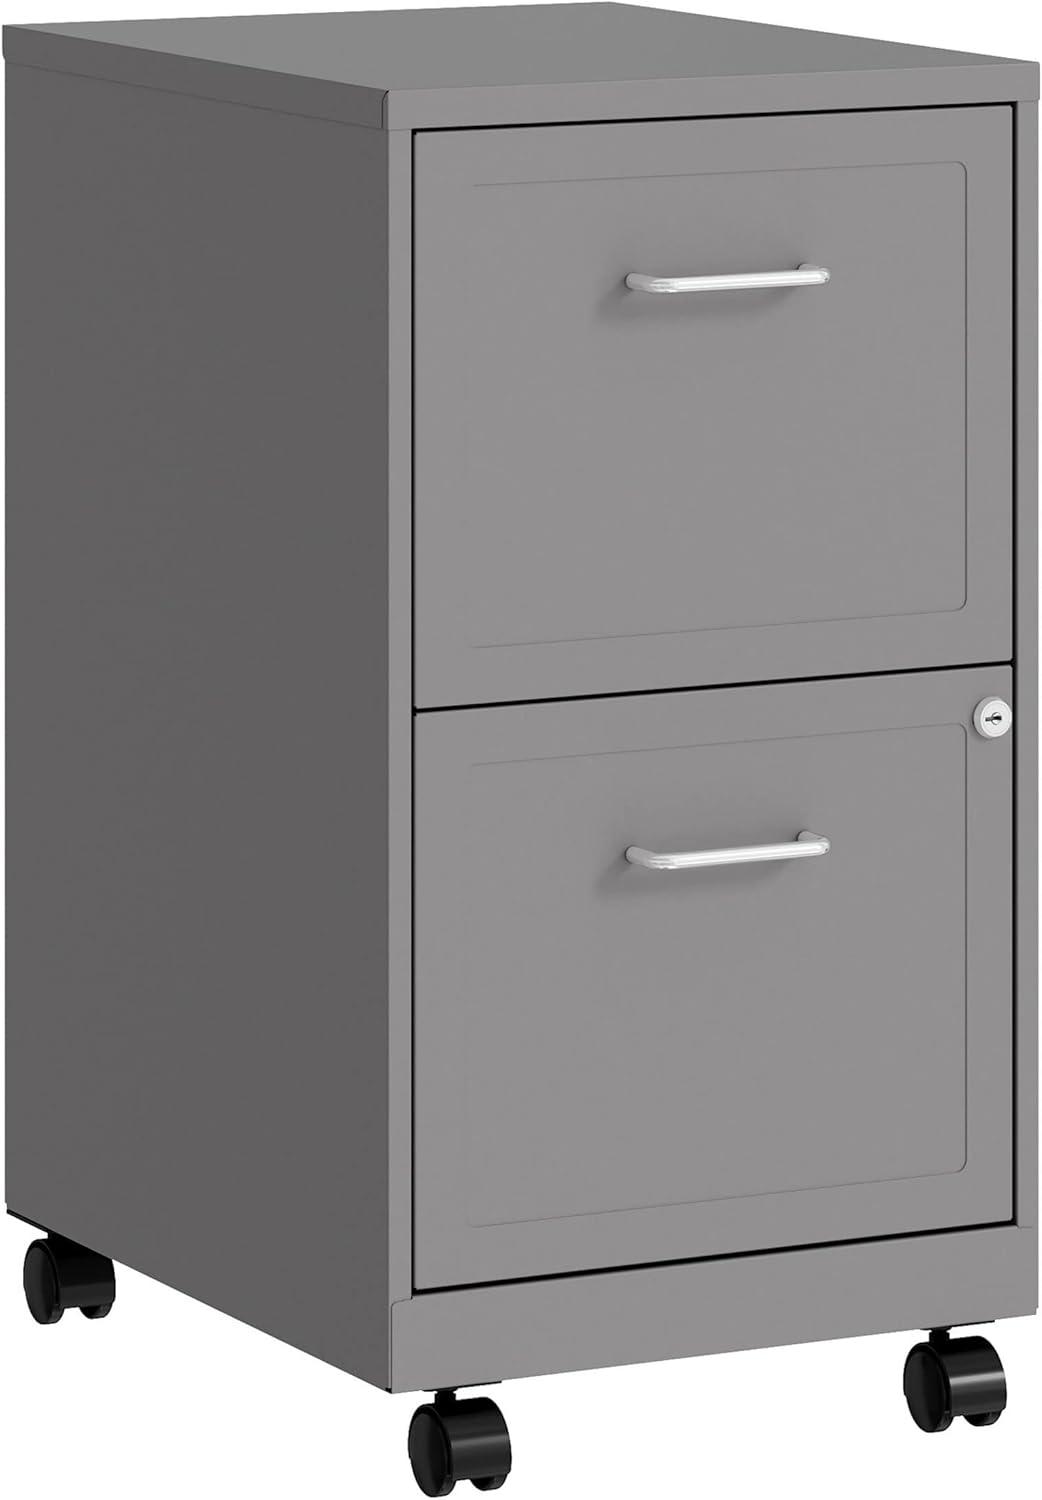 Vertical Silver Steel 4-Drawer Lockable Mobile File Cabinet